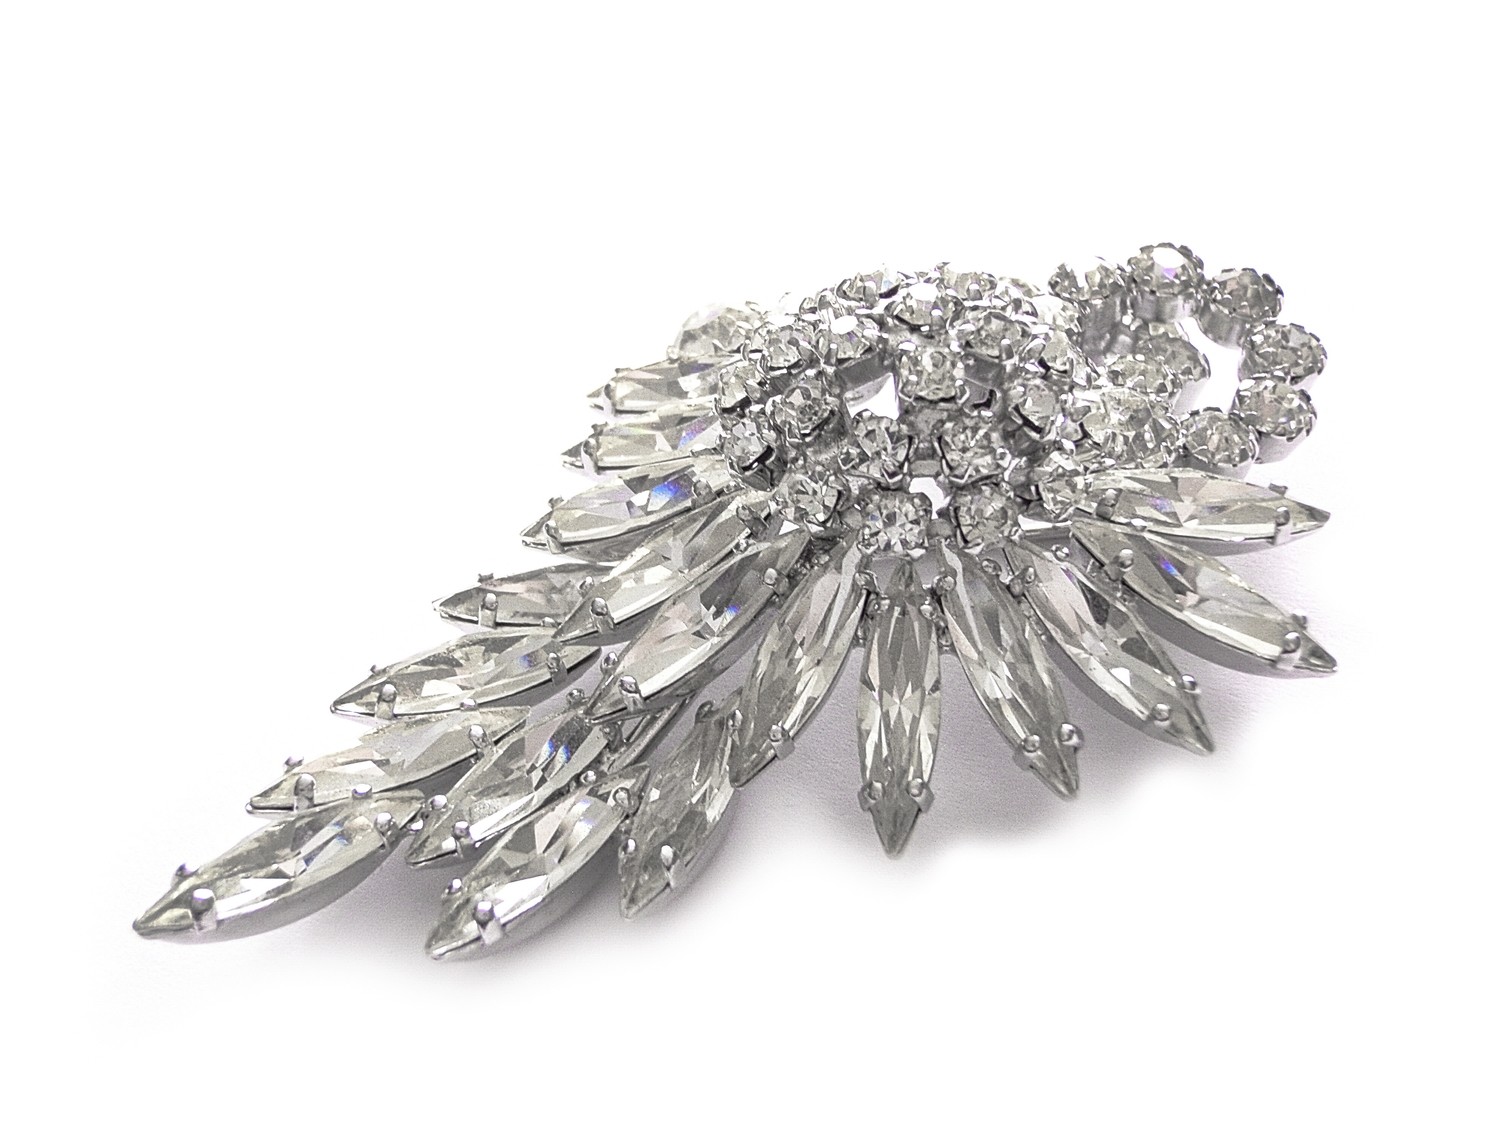 Gorgeous 1950s Large Crystal Brooch Evening Wear Wedding Brooch